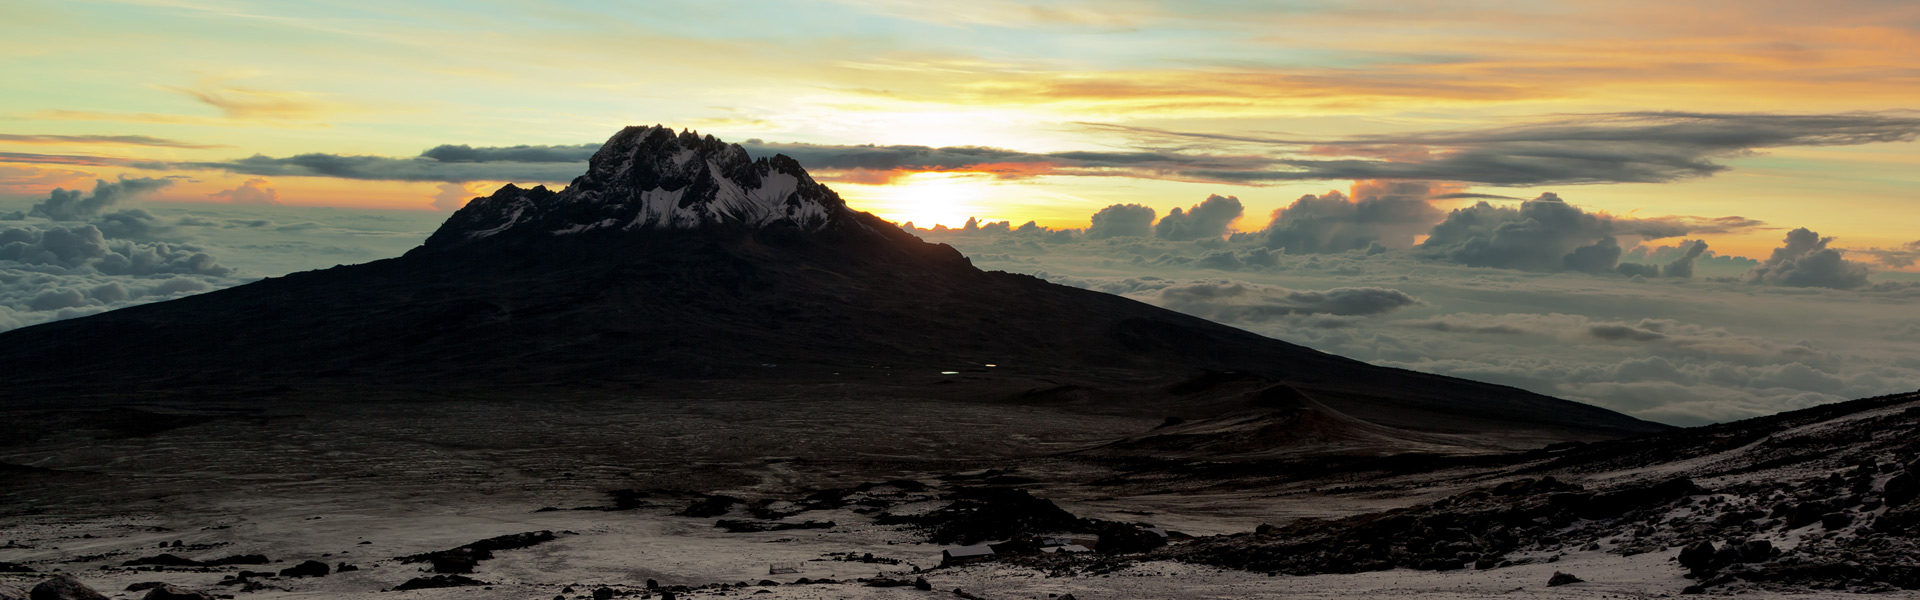 Kilimanjaro Faq's